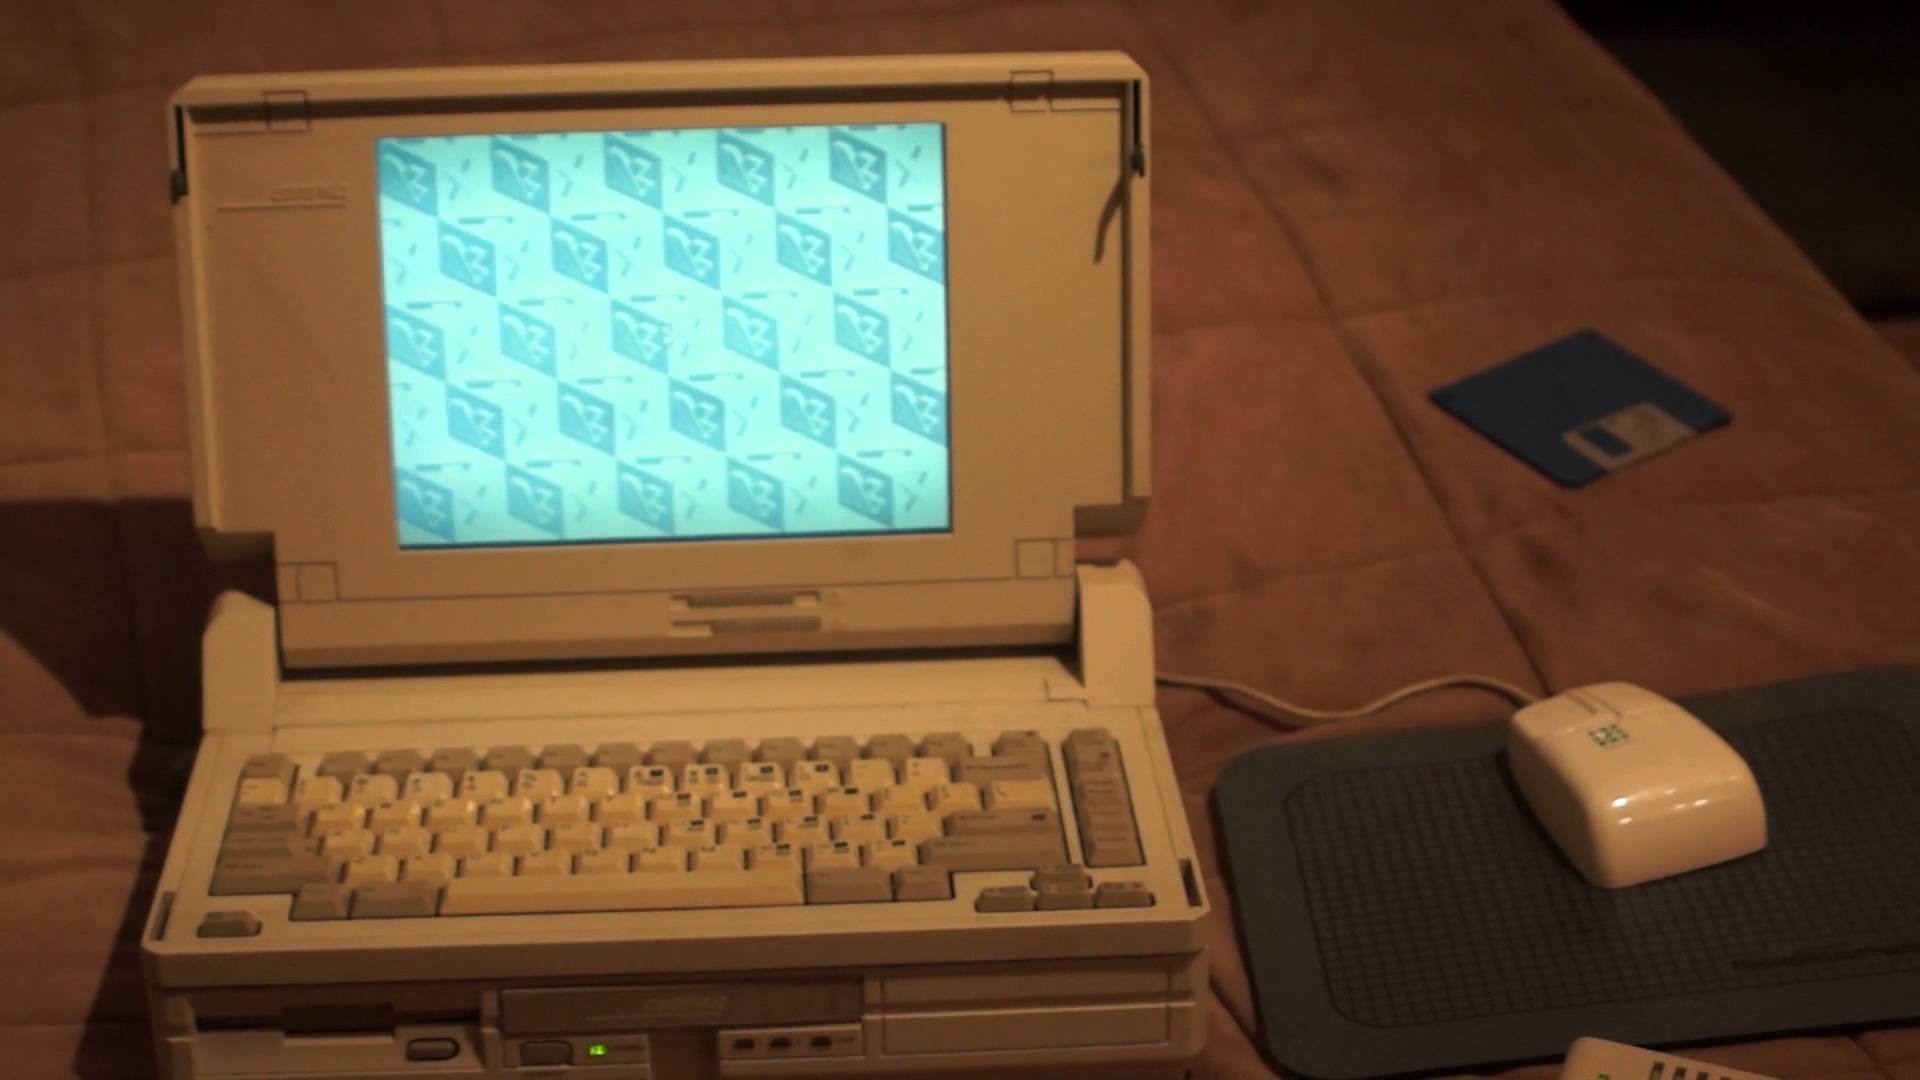 Compaq SLT 286 Vintage Laptop [1988] - YouTube